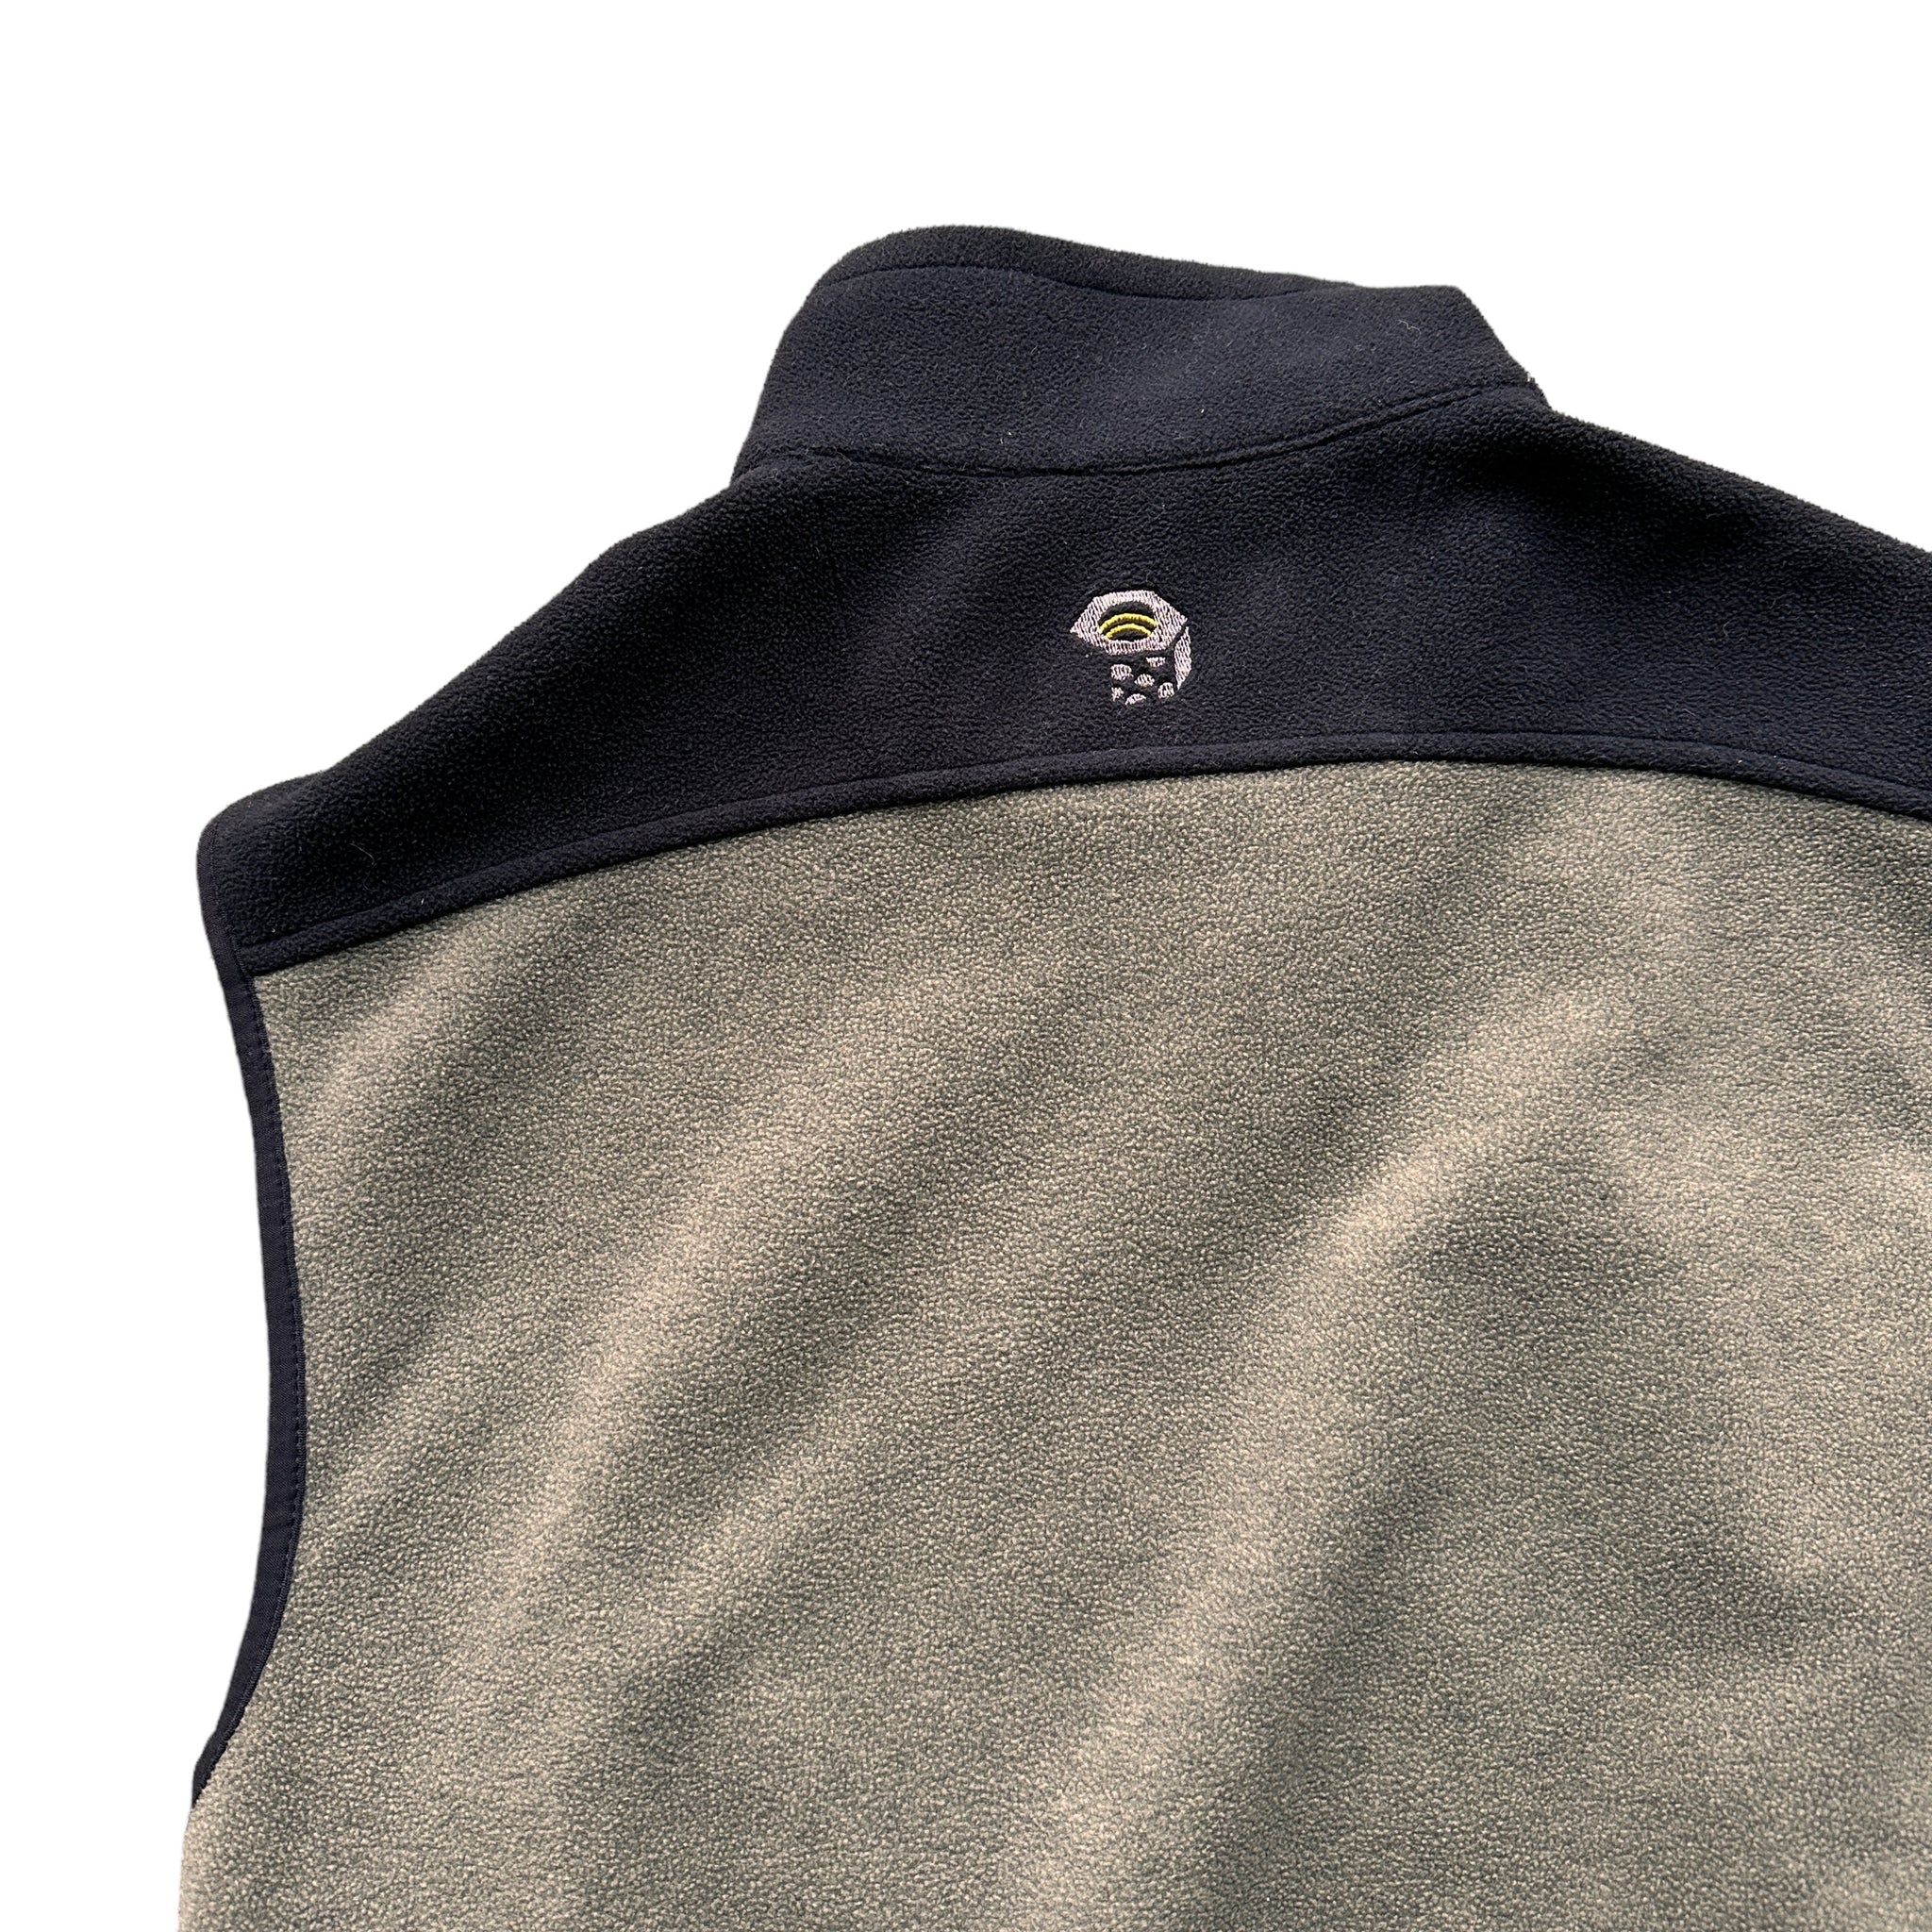 90s Mountain Hardwear fleece vest Made in usa🇺🇸 medium